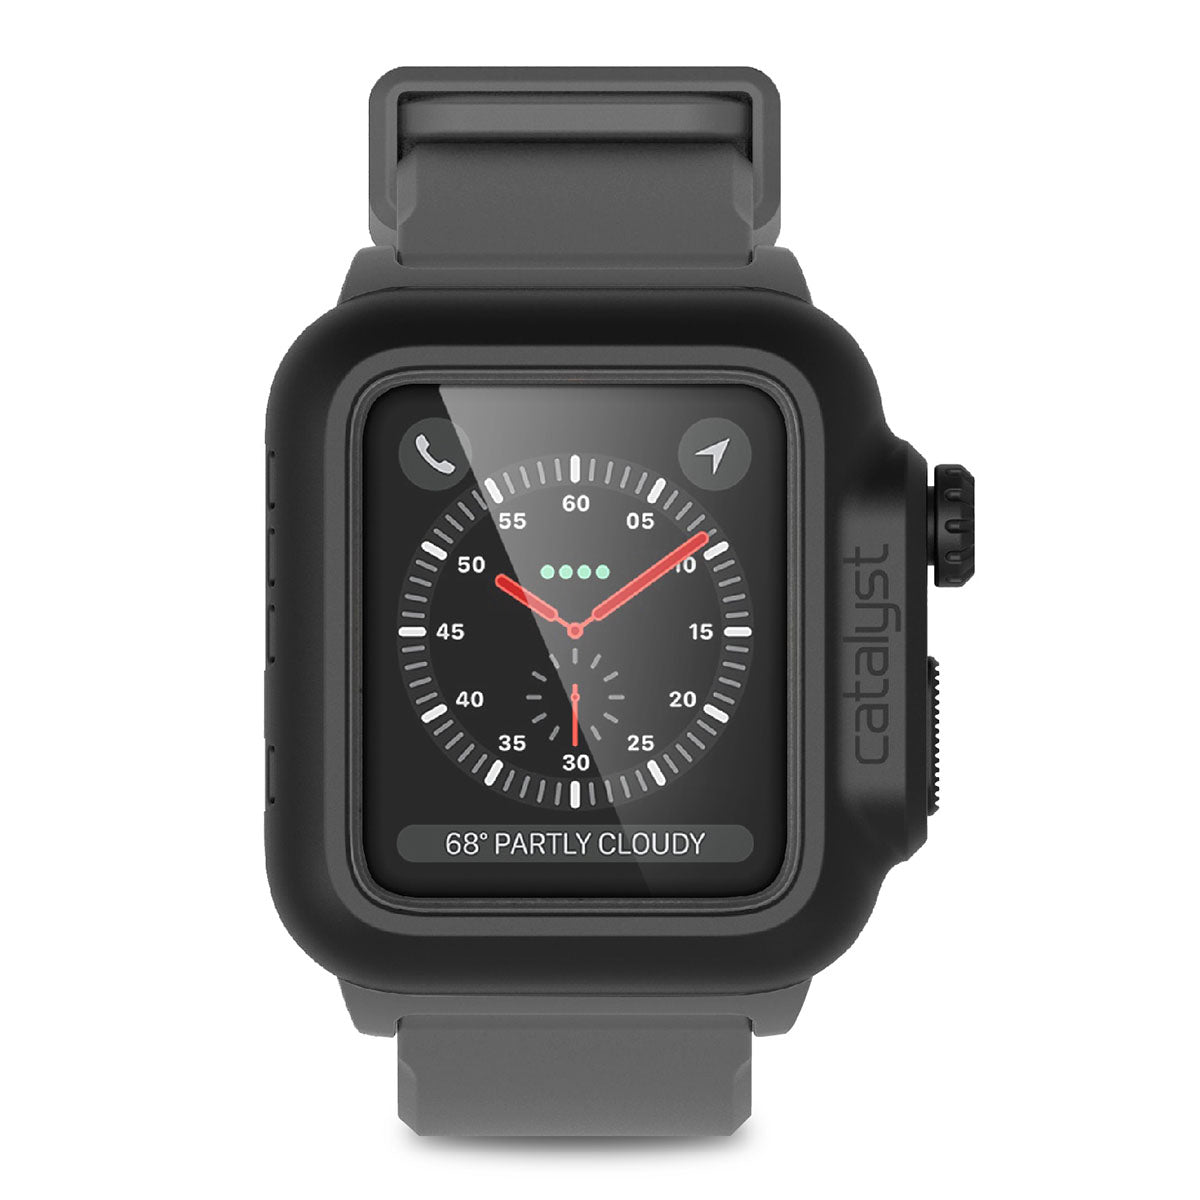 Buy Waterproof Case for 42mm Apple Watch Series 3 by Catalyst®